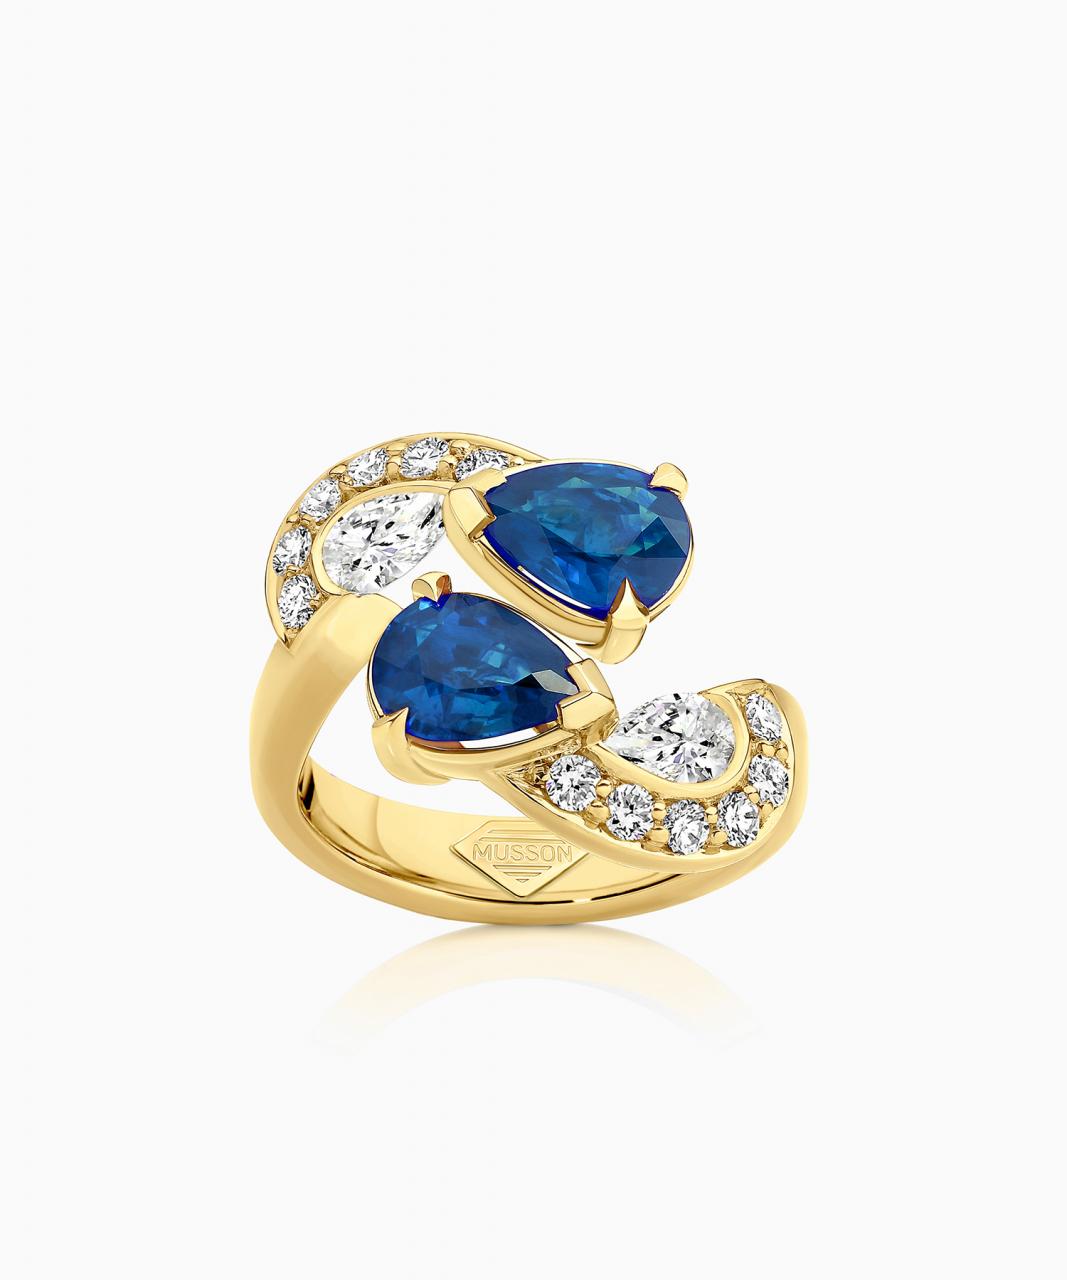 Allegra Blue Sapphire Ring